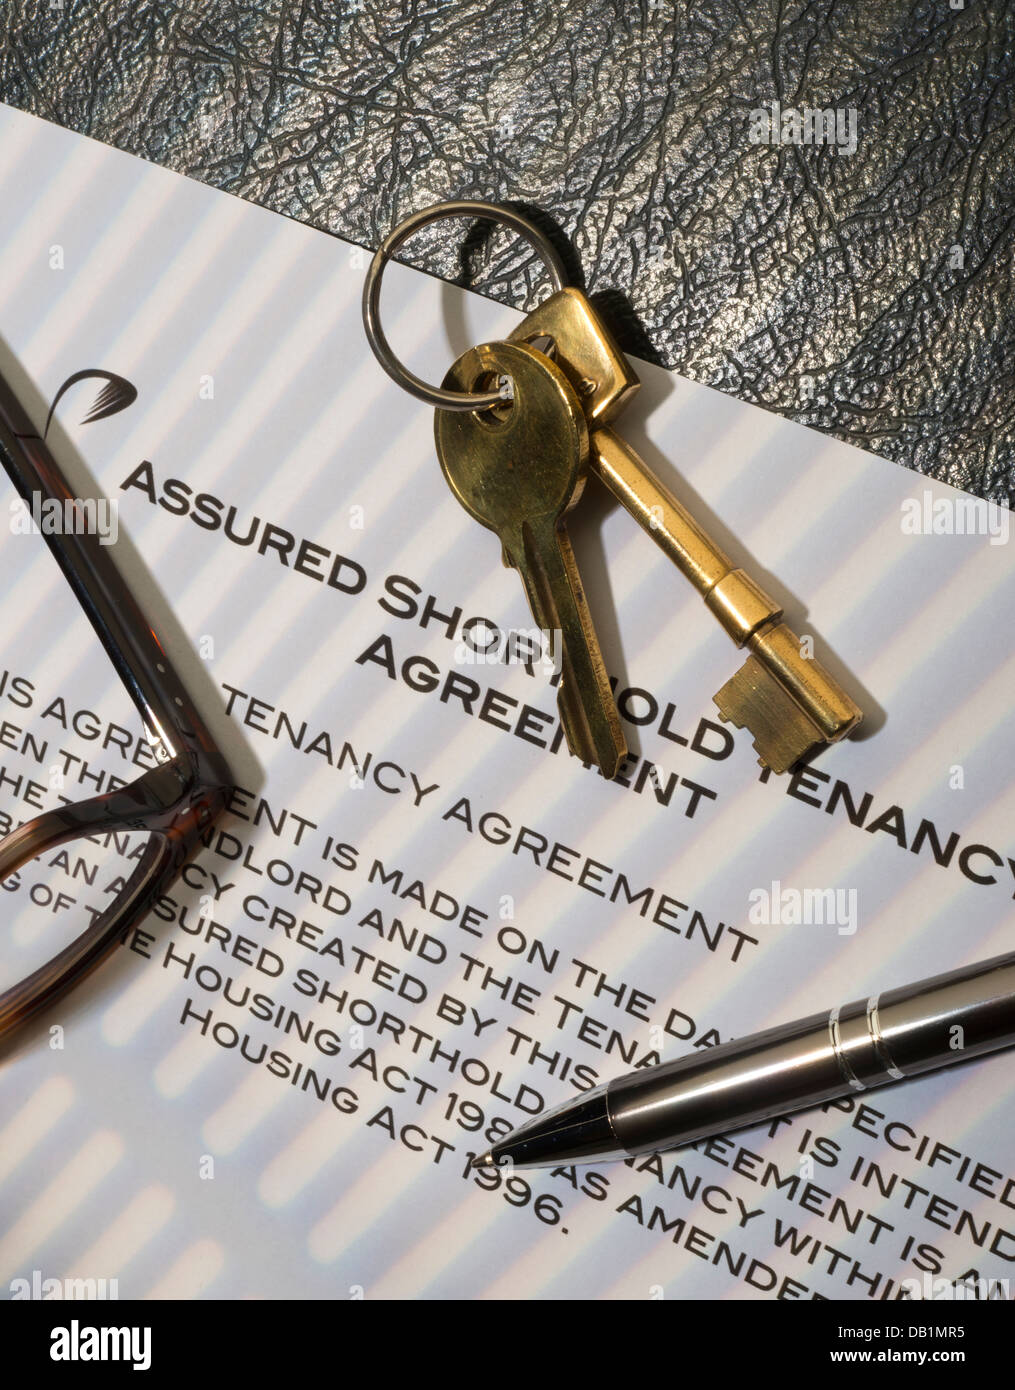 Assured Shorthold Tenancy Agreement. Property rental Stock Photo